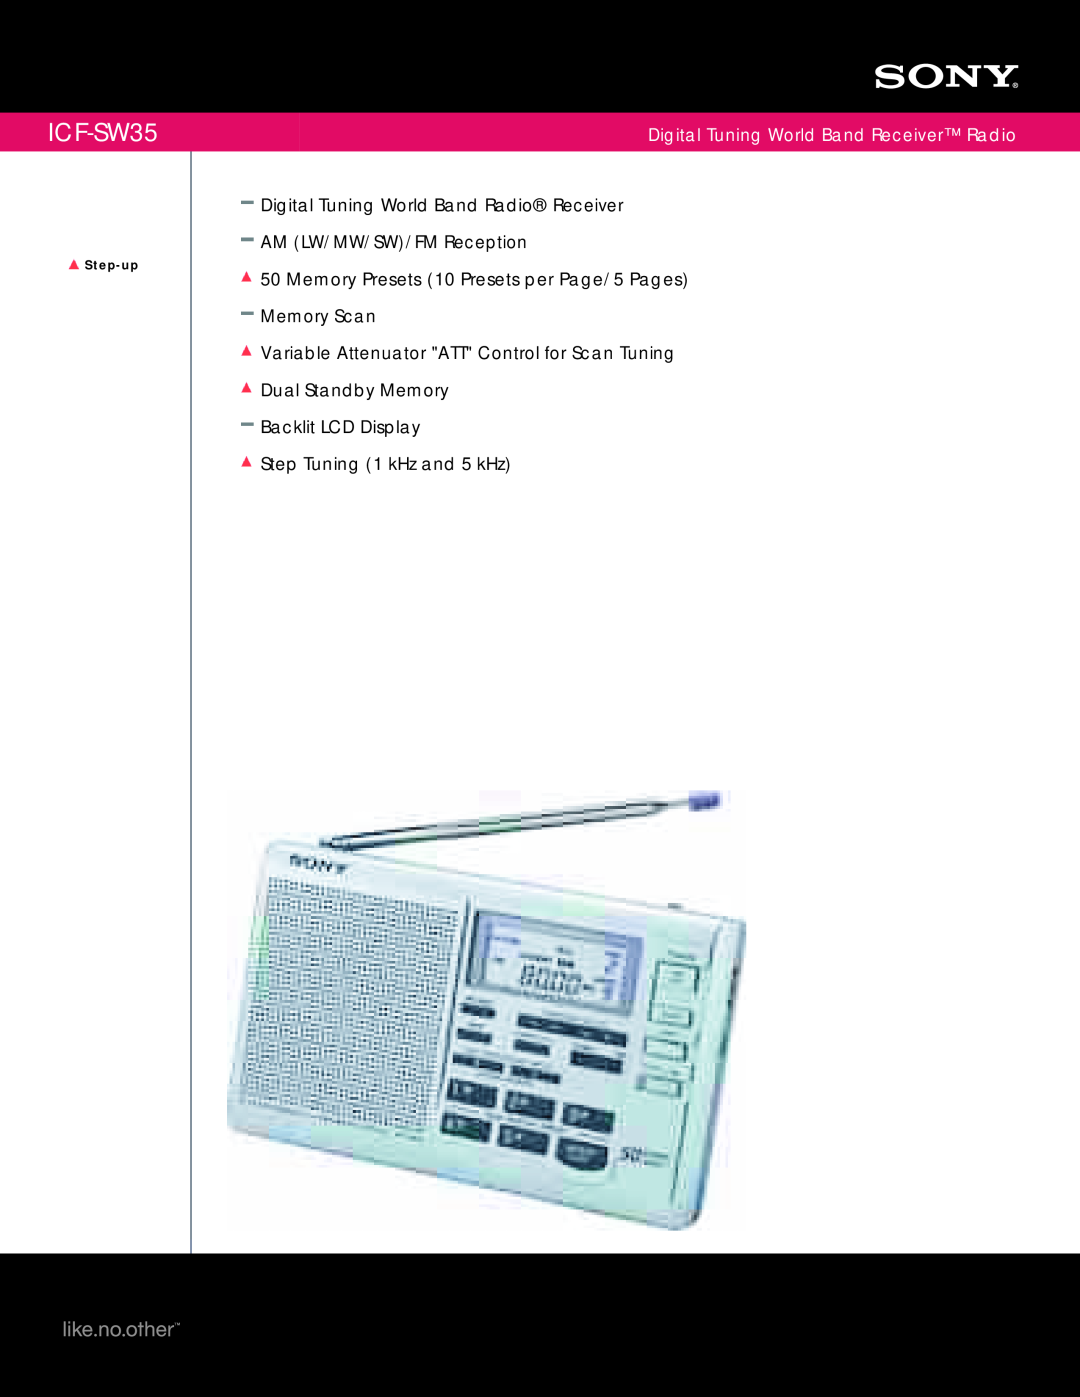 Sony ICF-SW35 manual Digital Tuning World Band Receiver Radio, Digital Tuning World Band Radio Receiver, Memory Scan 